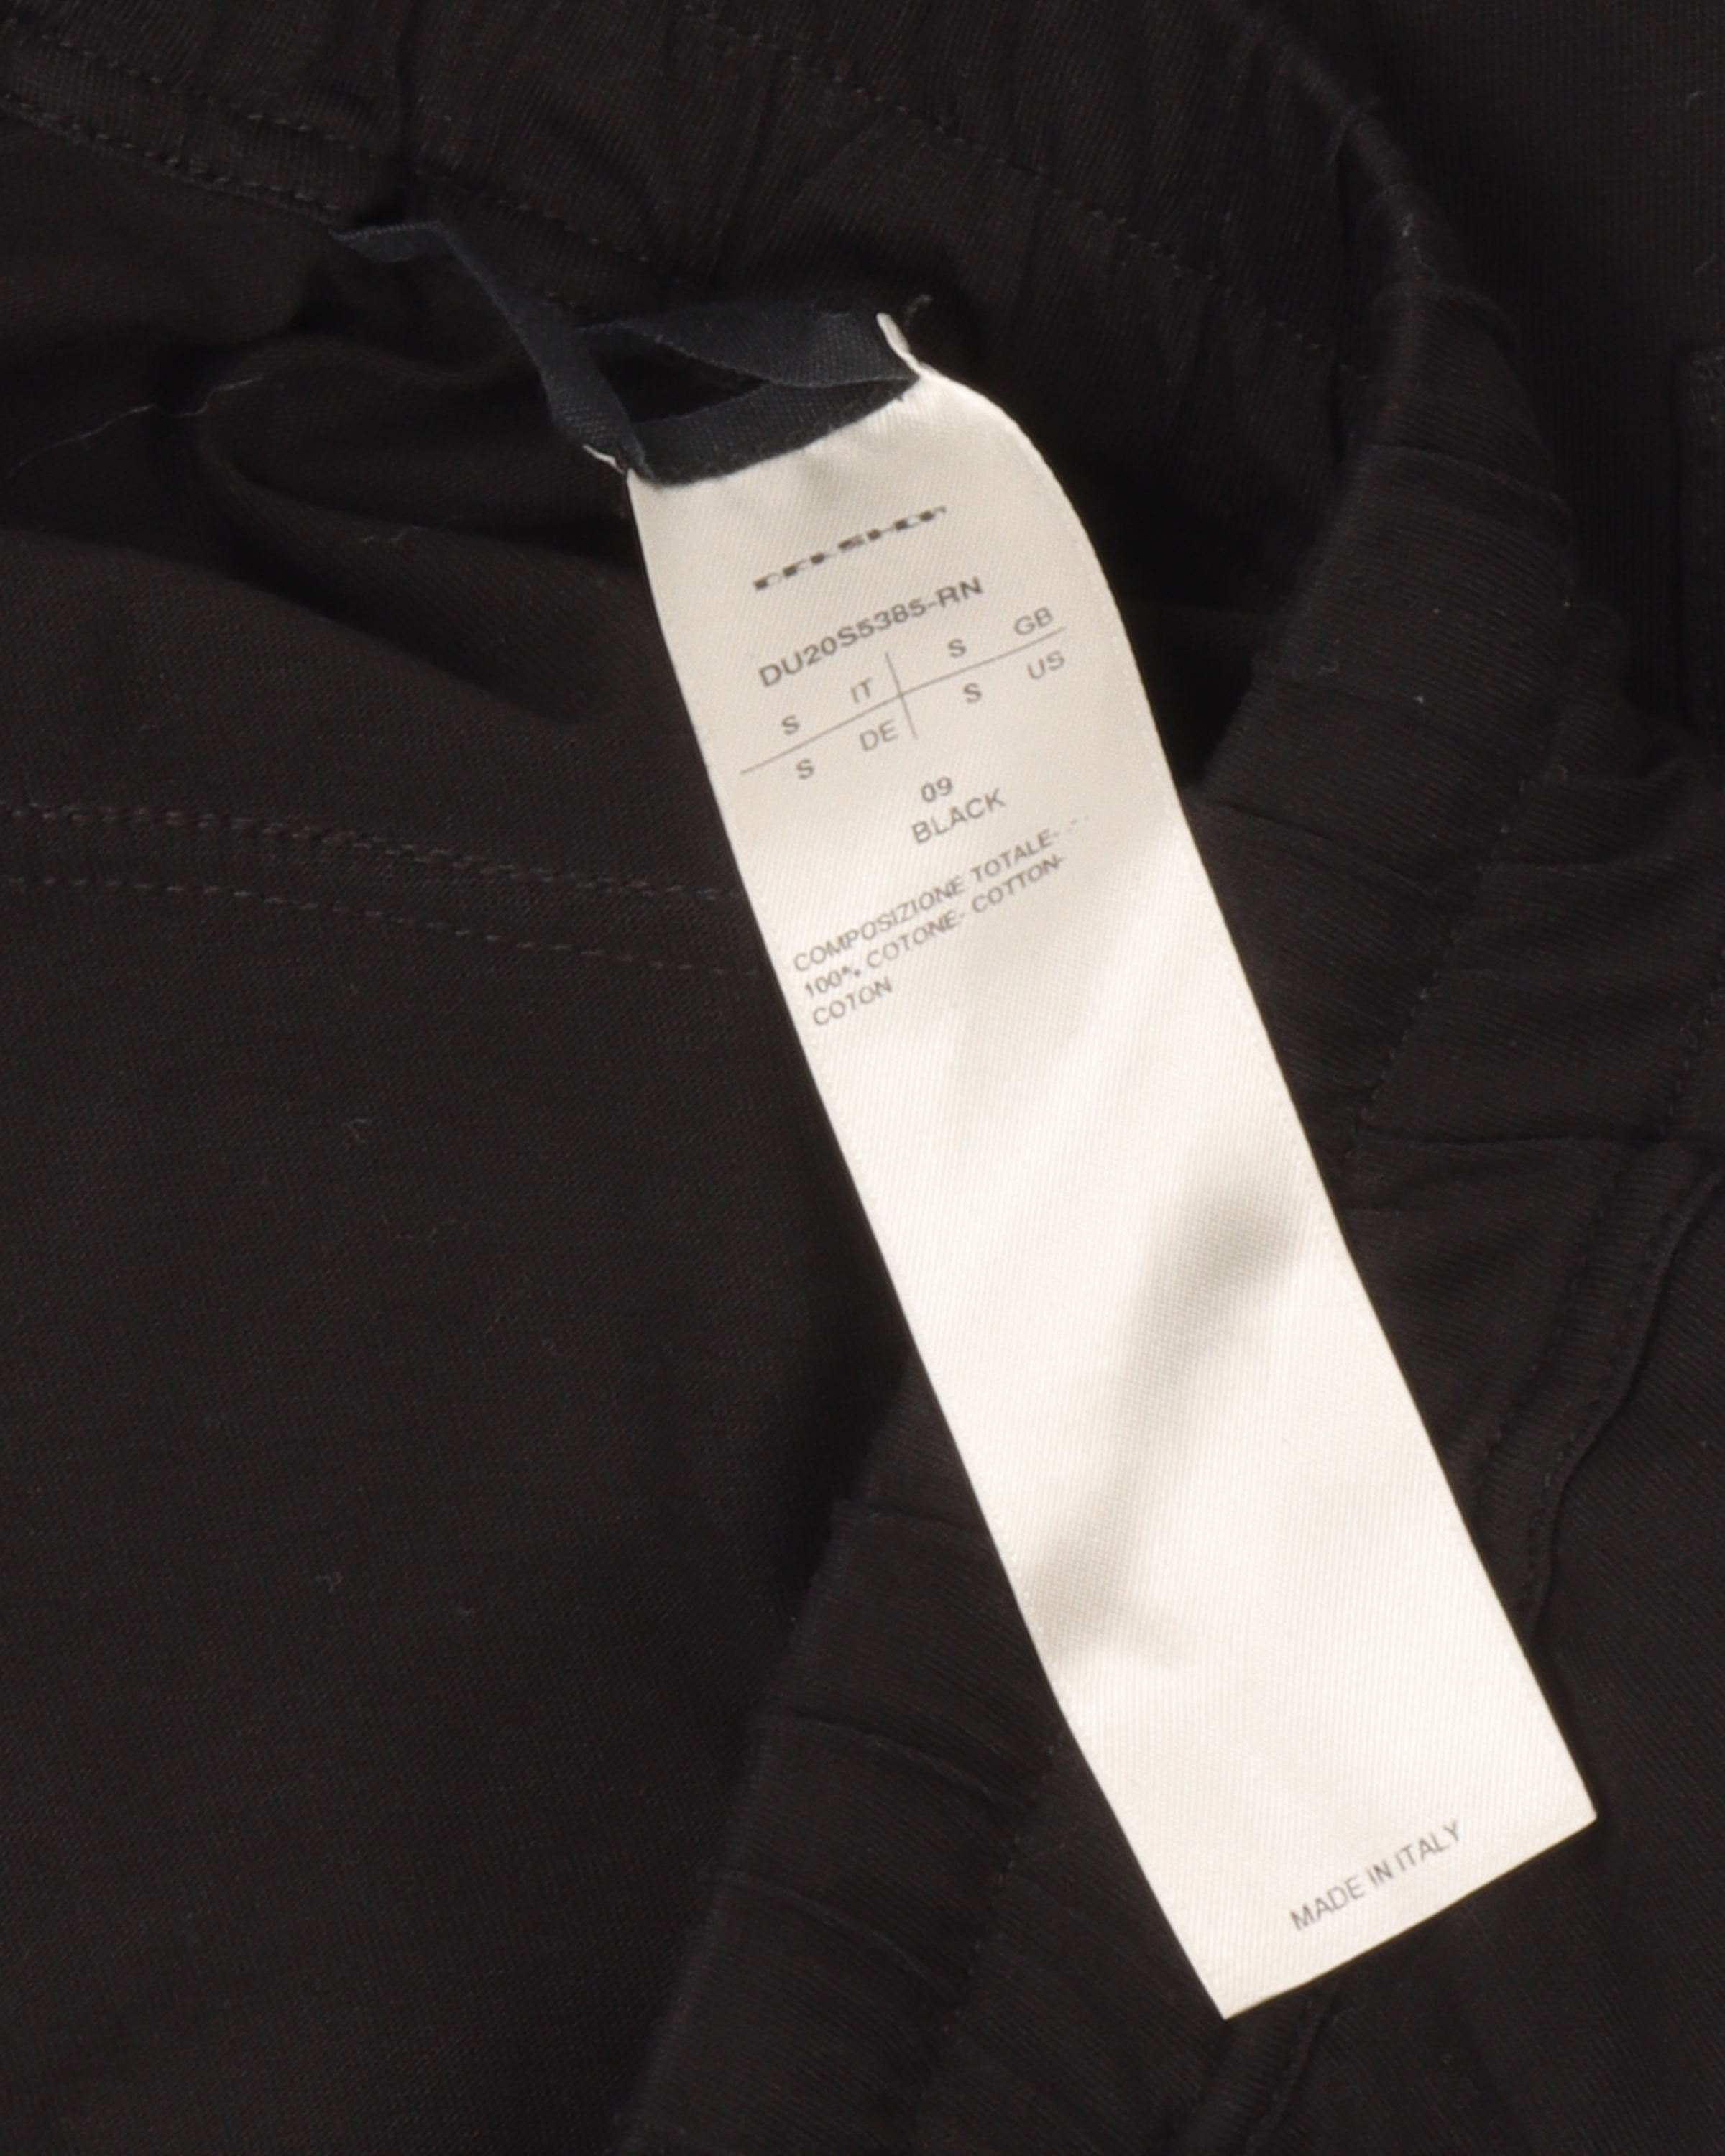 Zipper-Pocket Drawstring Sweatpants